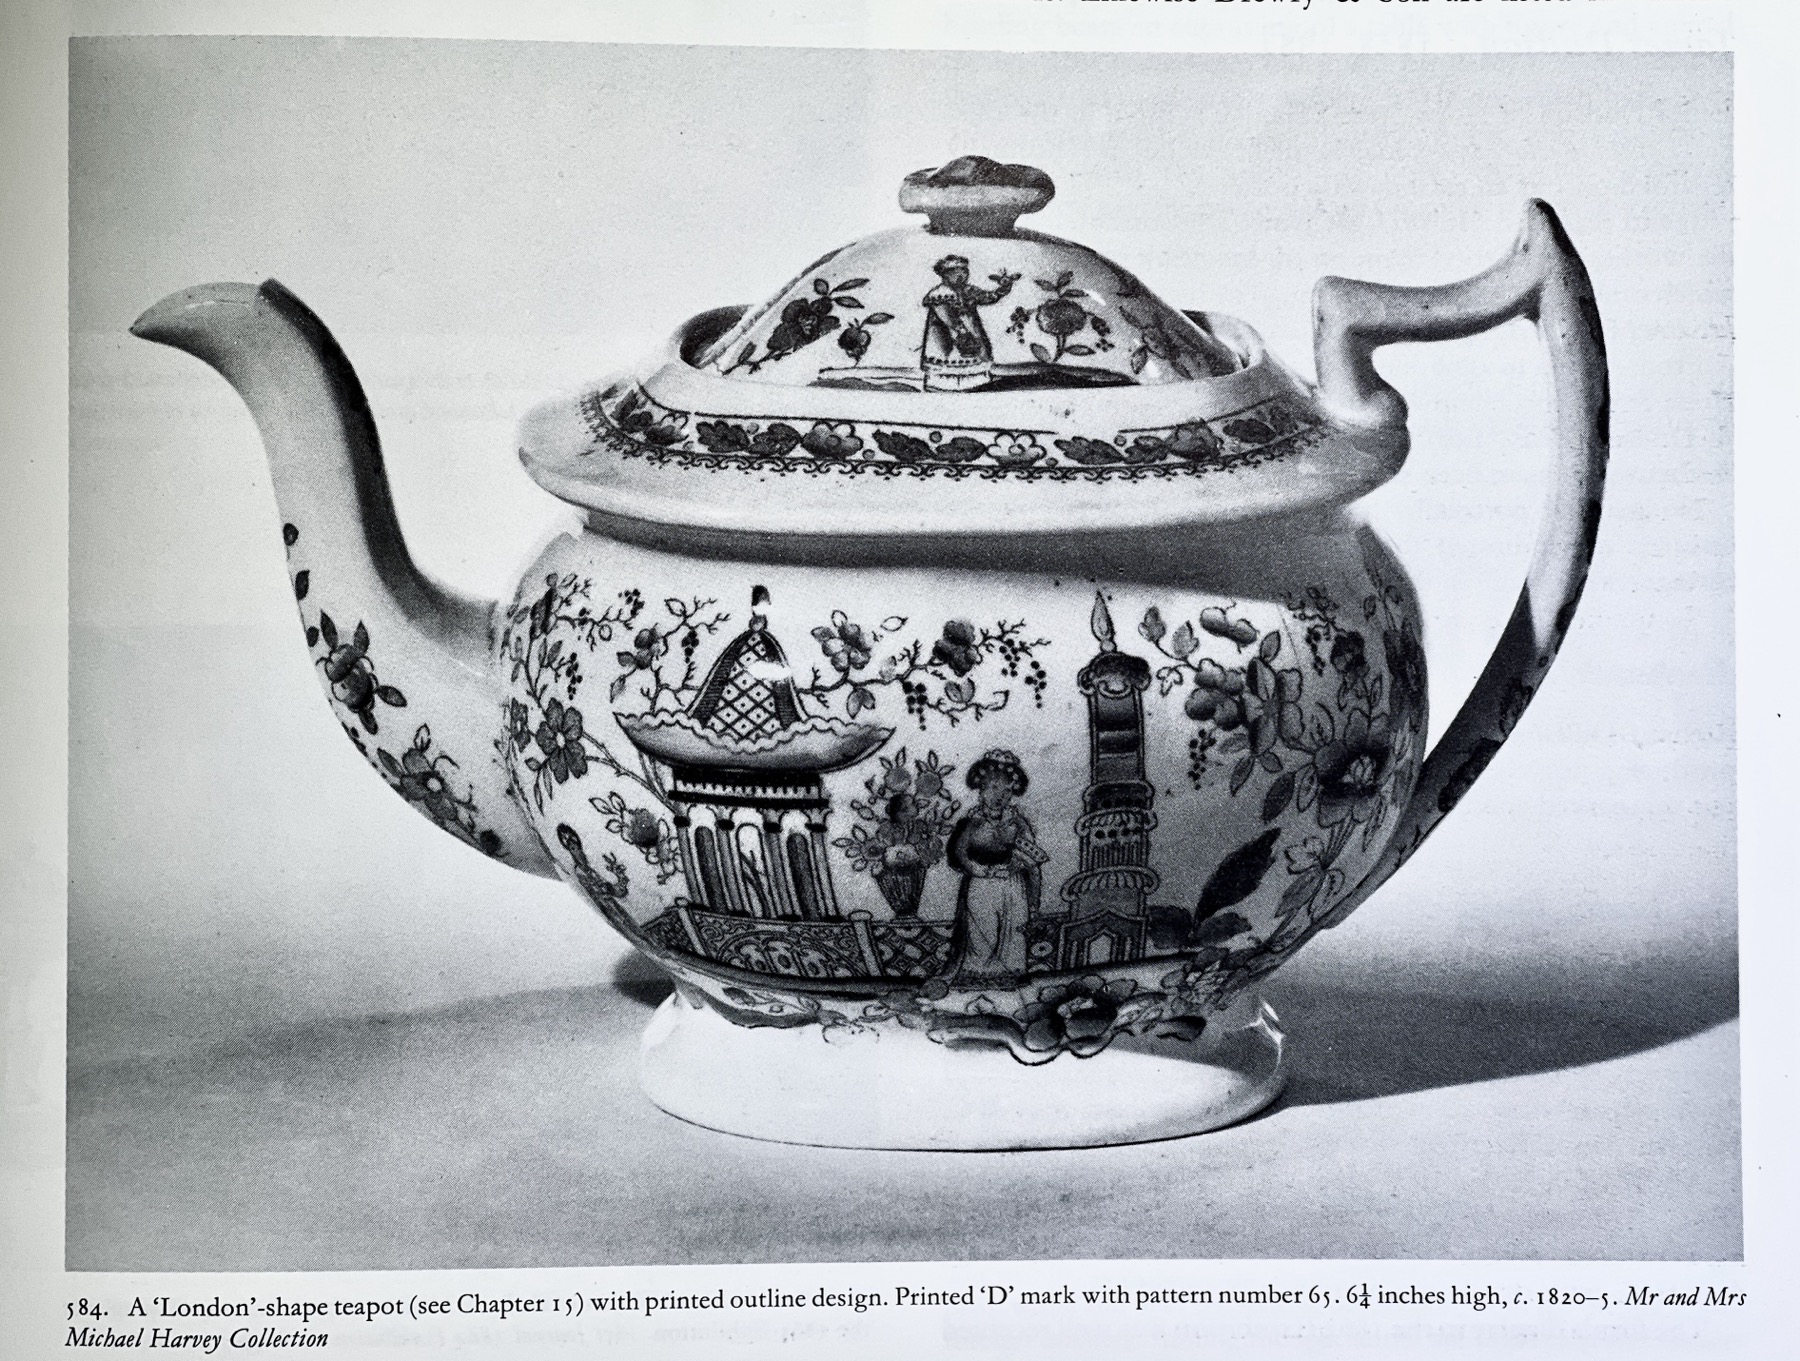 Godden's 'Staffordshire Porcelain' example of Drewry porcelain